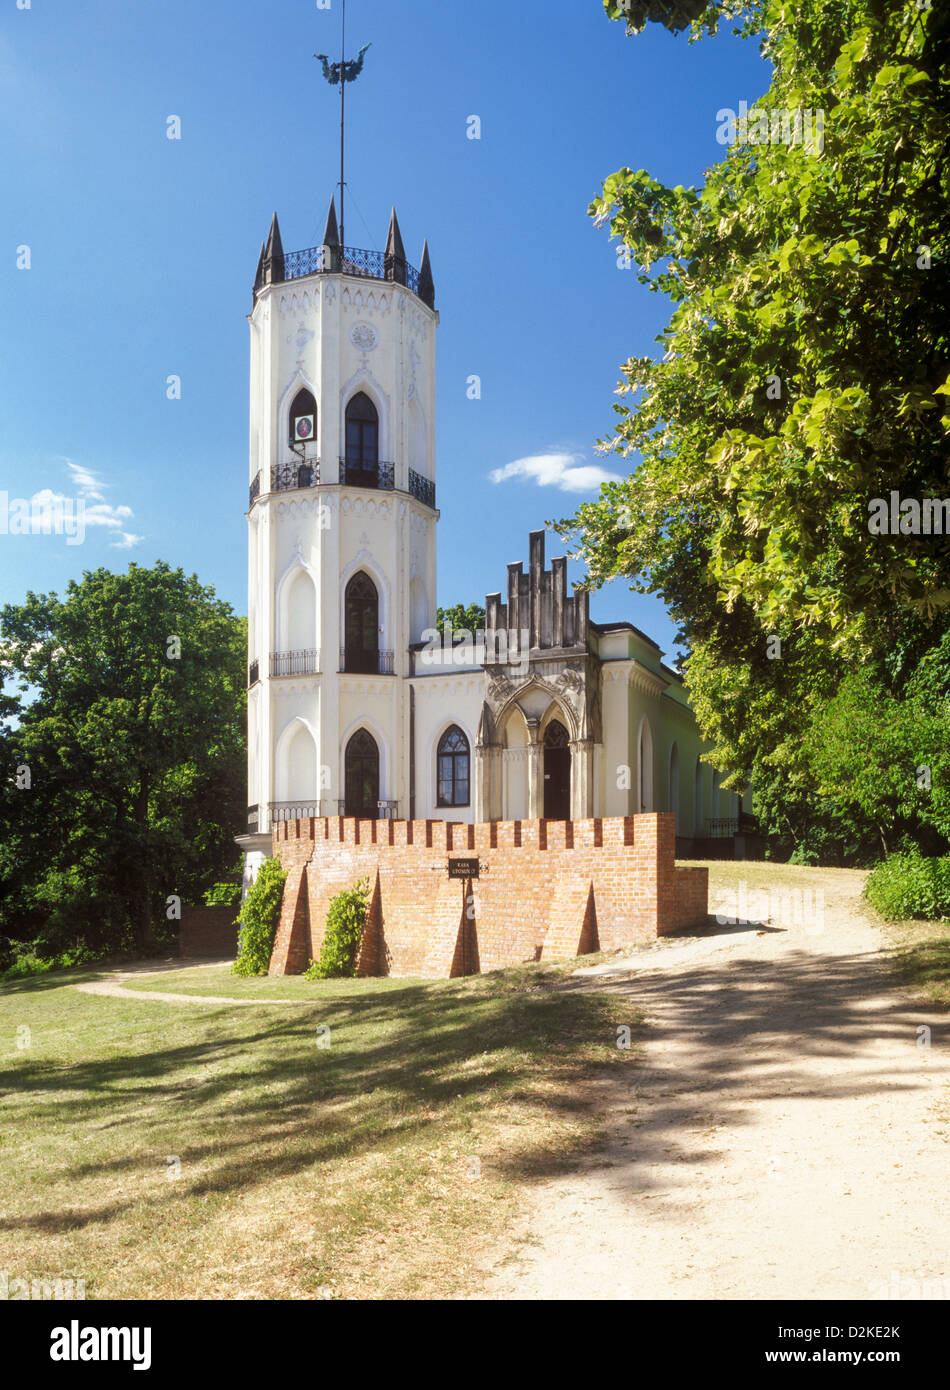 The Palace Krasinski and museum in Opinogora, Mazovia, Poland Stock Photo